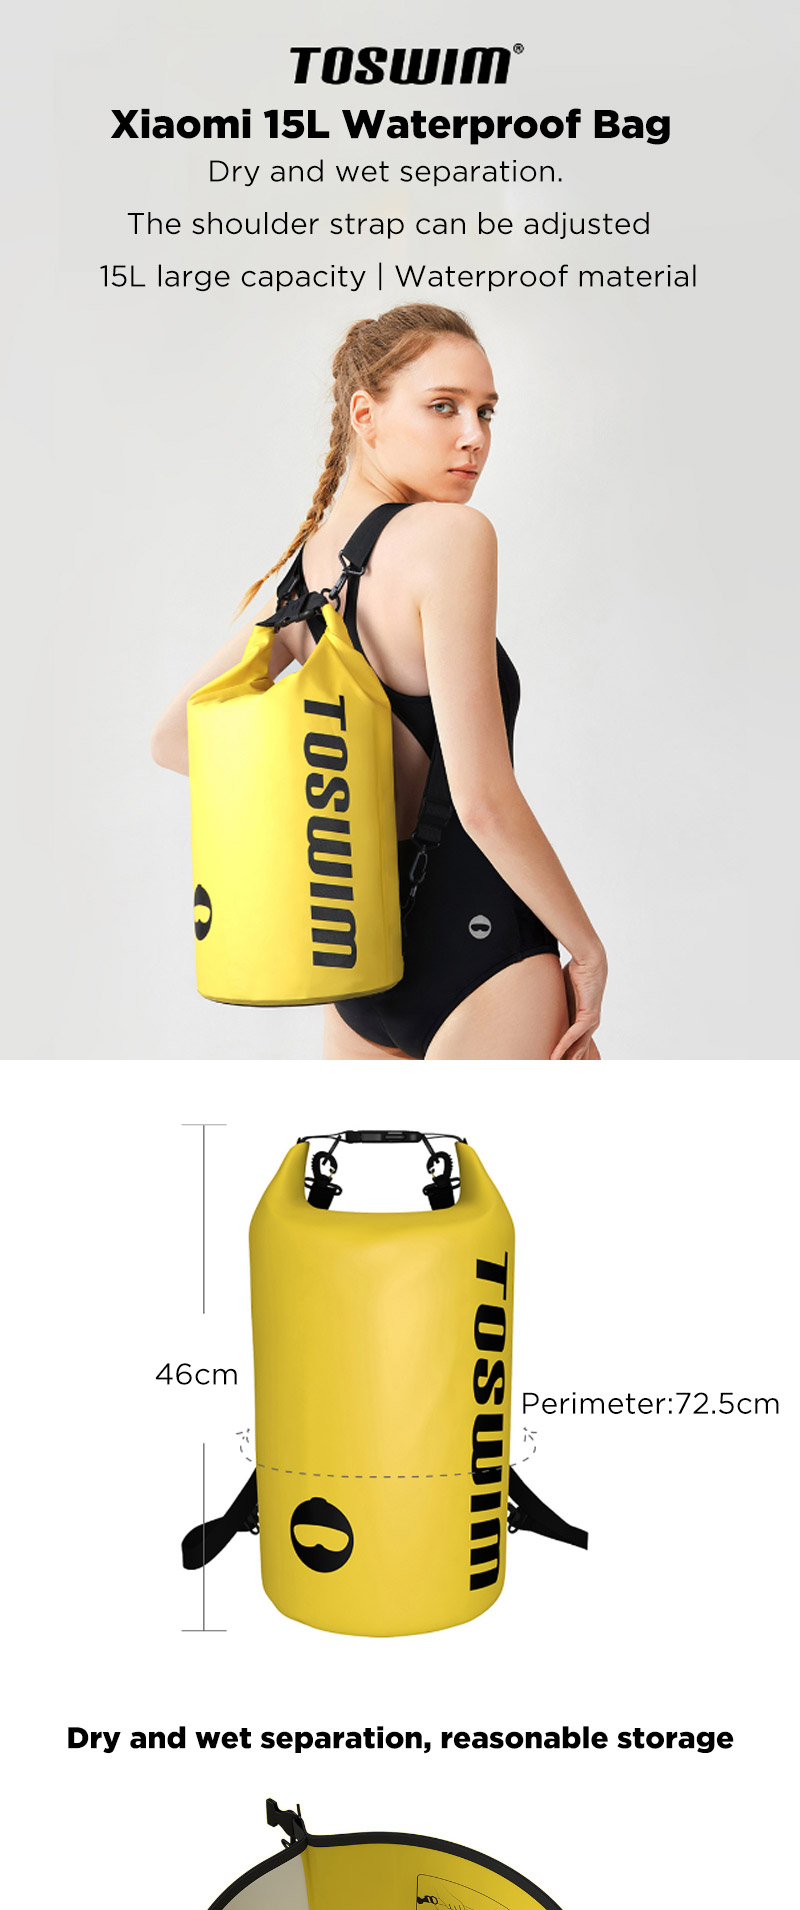 xiaomi toswim 15l waterproof backpack